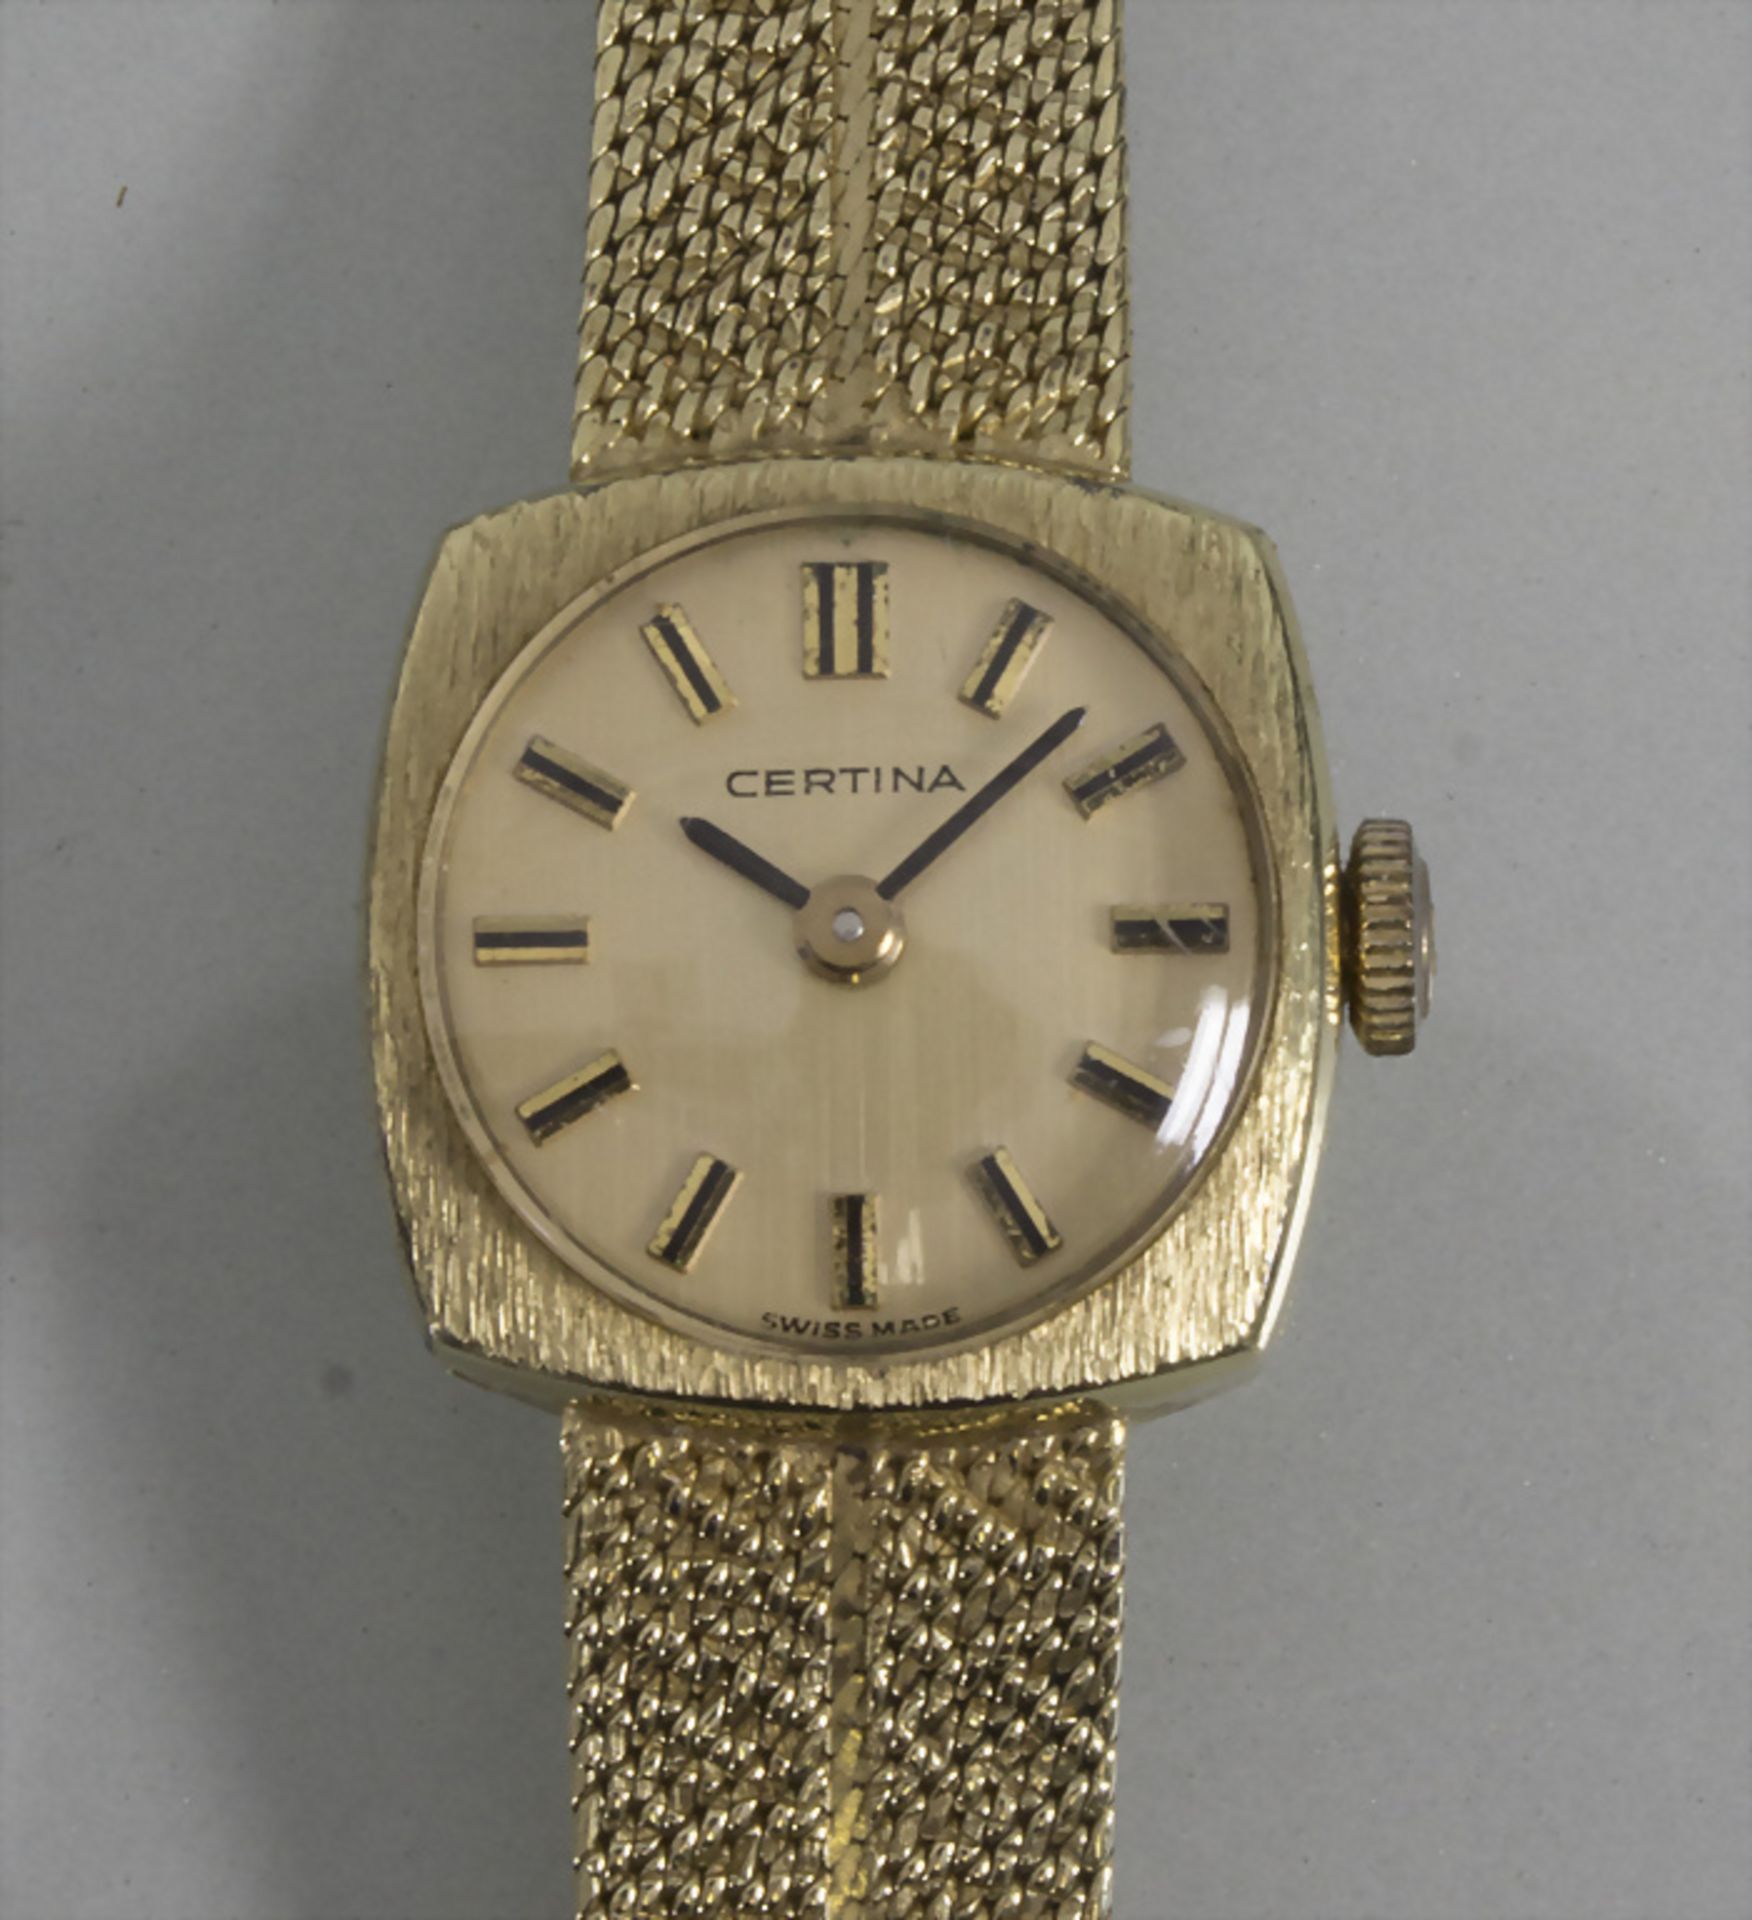 Damenarmbanduhr in Gold / A ladies 14k gold wristwatch, Certina